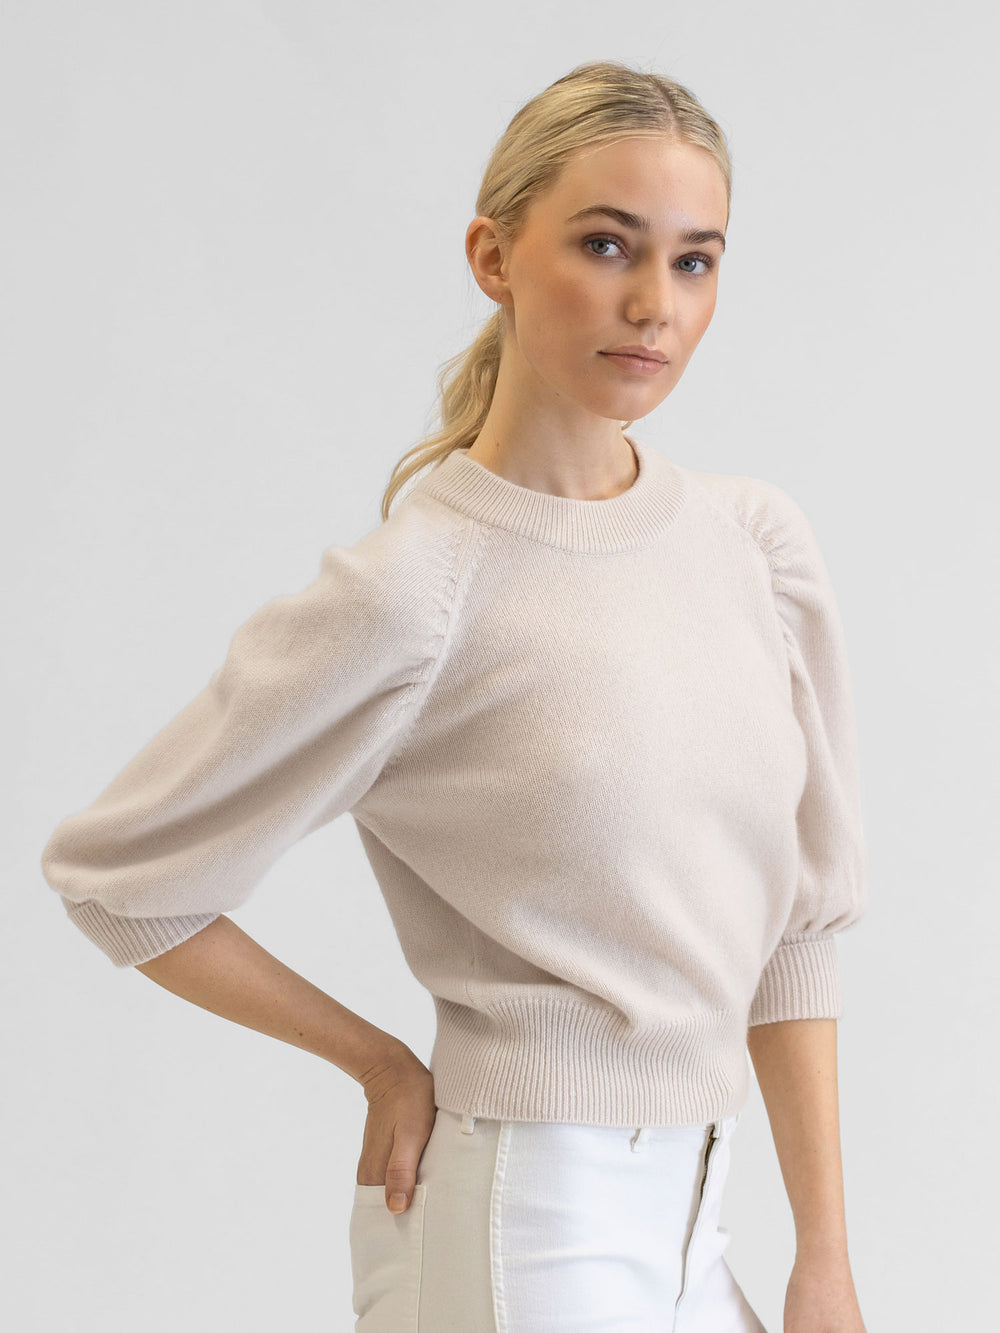 cashmere sweater aurora, 100% cashmere from Kashmina. Norwegian design, color pearl